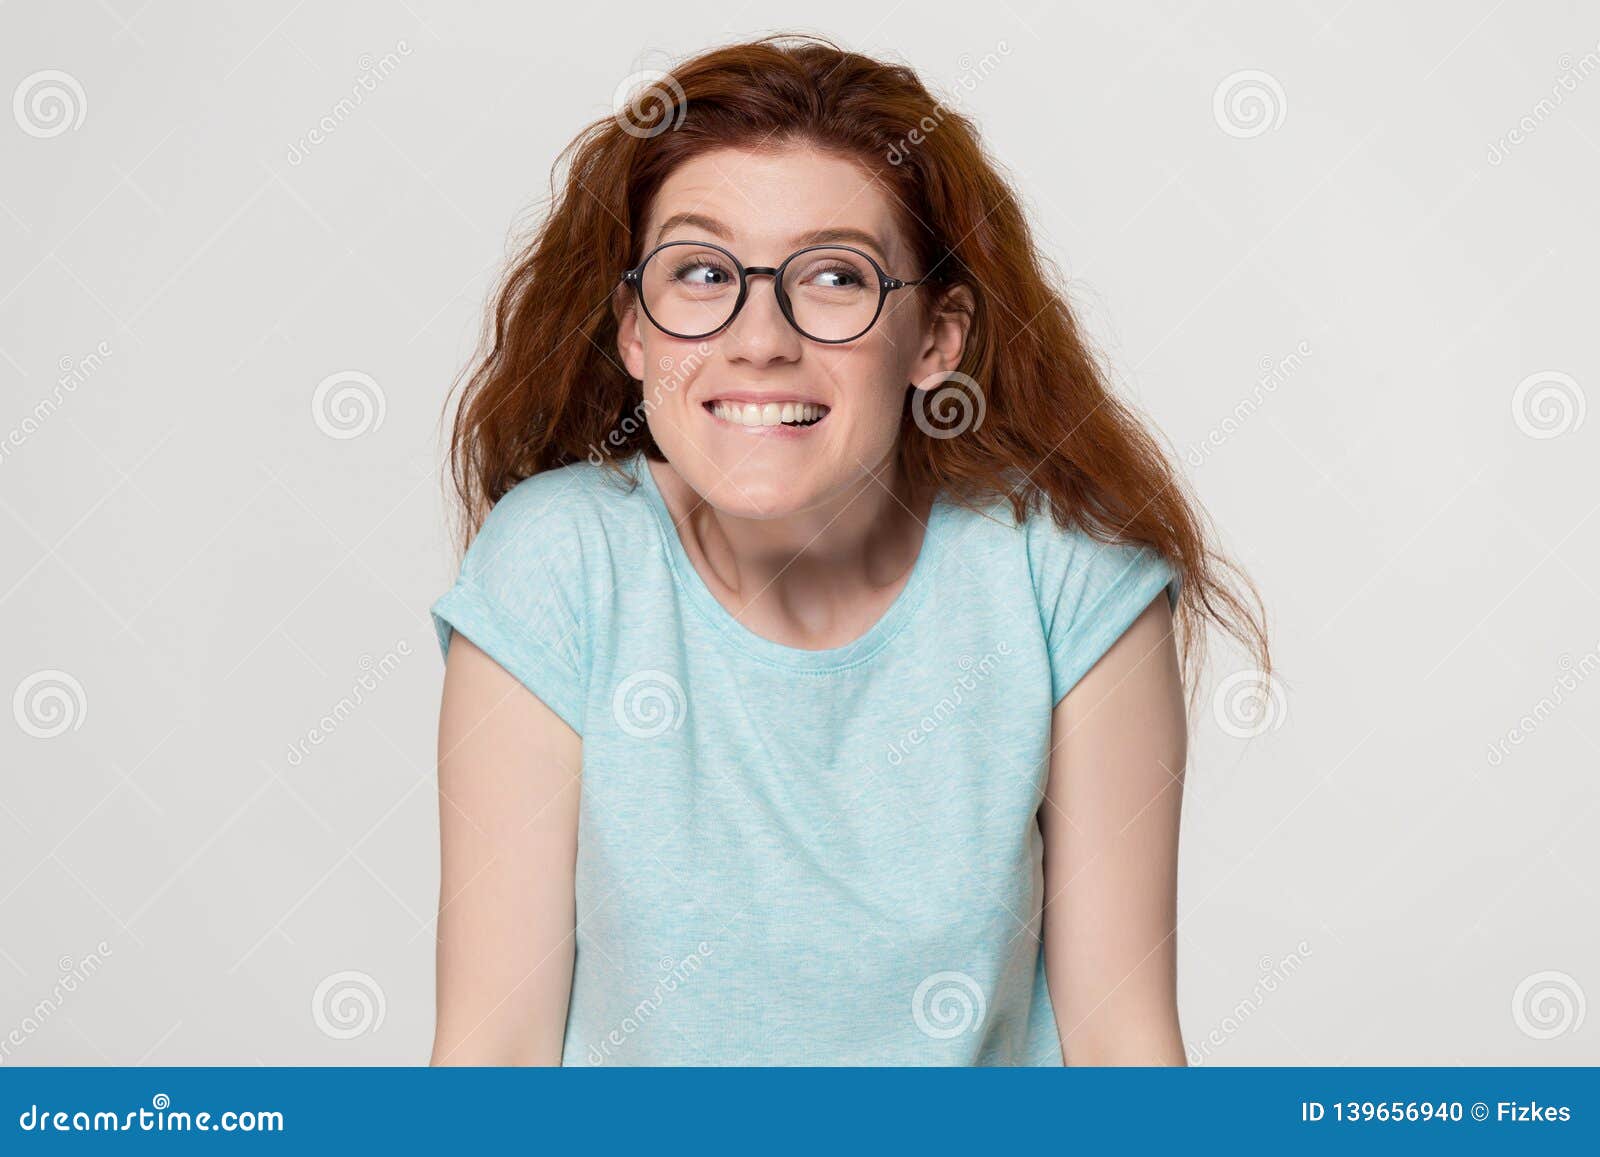 Cute Shy Redhead Girl In Glasses Biting Lips Feeling Embarrassed Stock